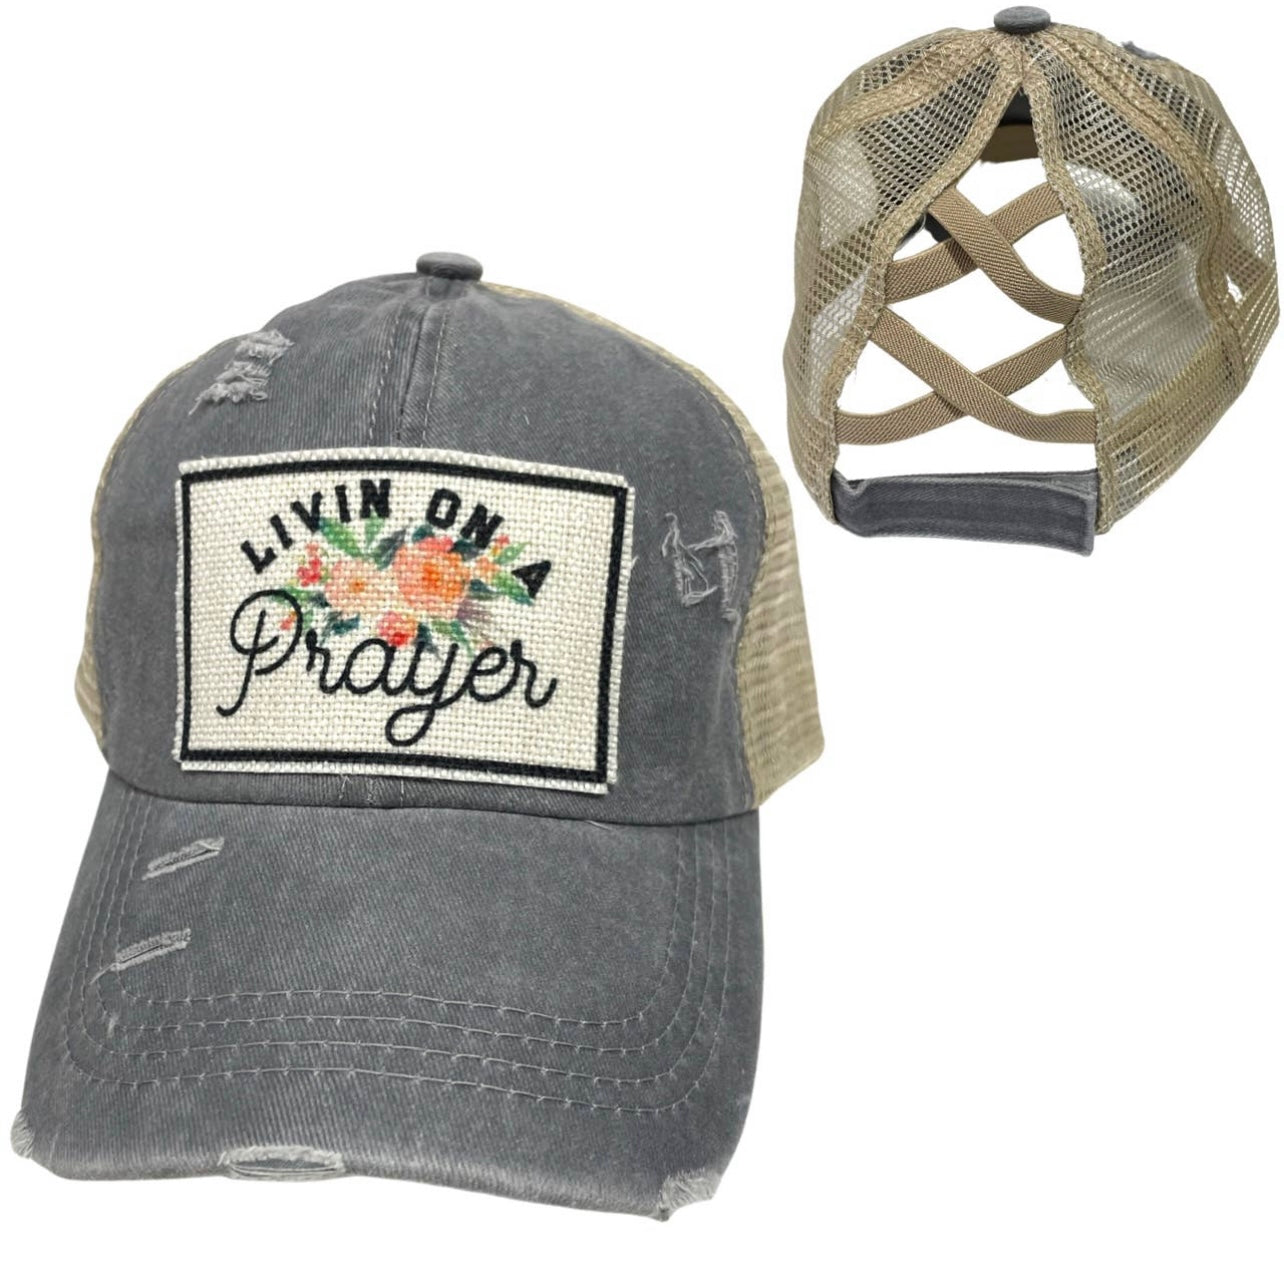 LIVIN' ON A PRAYER CRISS-CROSS PONYTAIL HAT